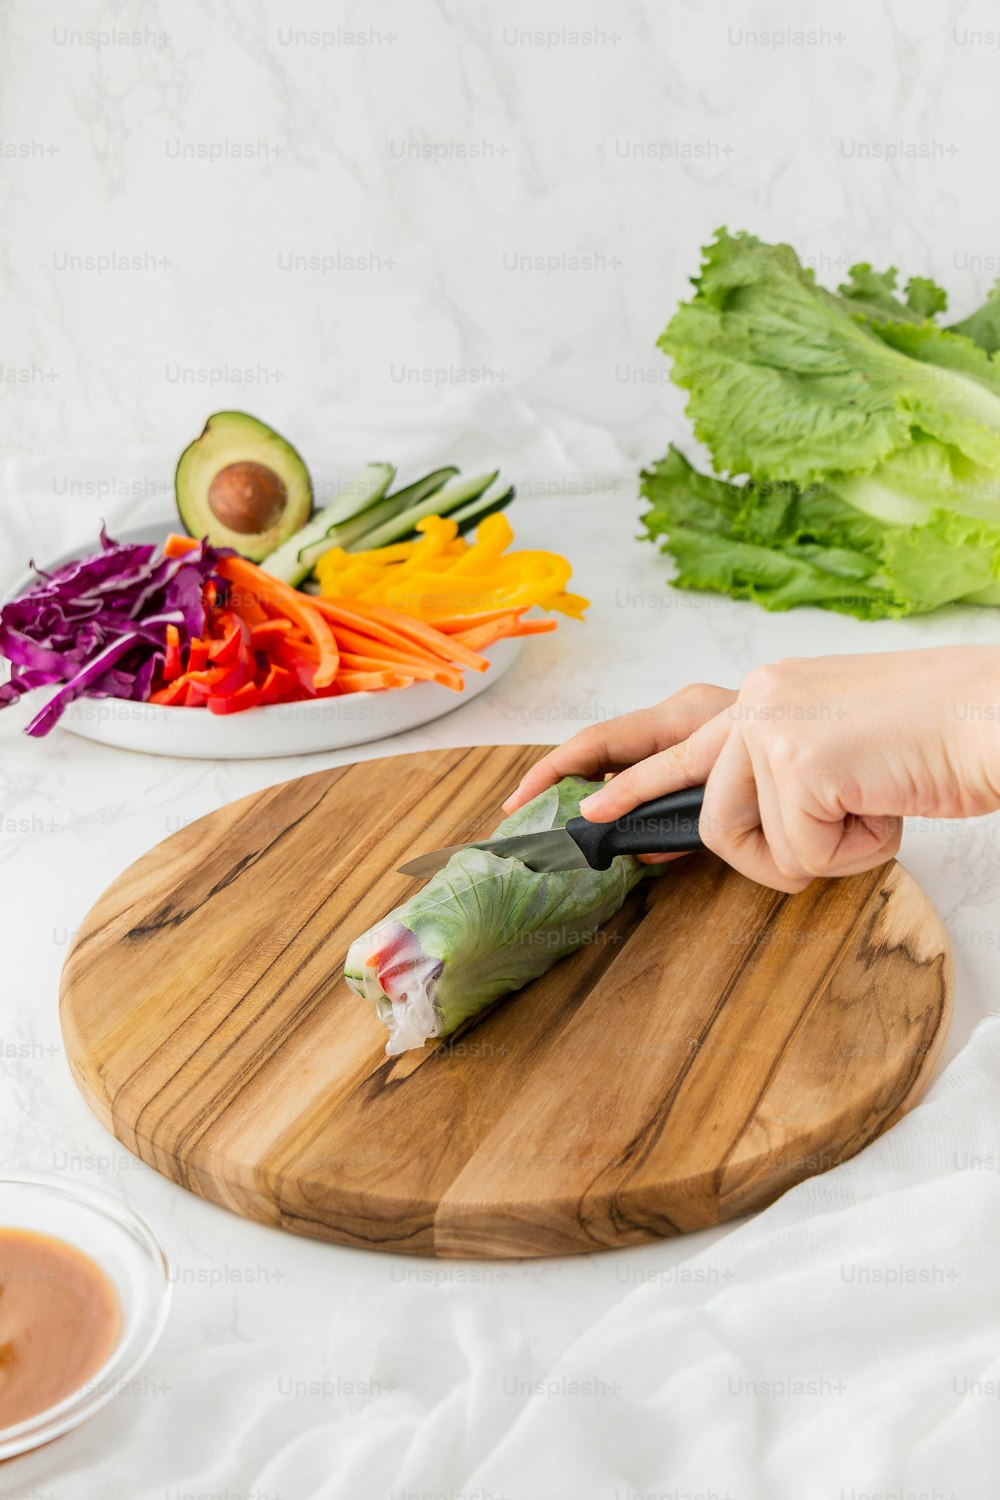 Premium Photo  Woman cutting avocado on cutting board to prepare breakfast